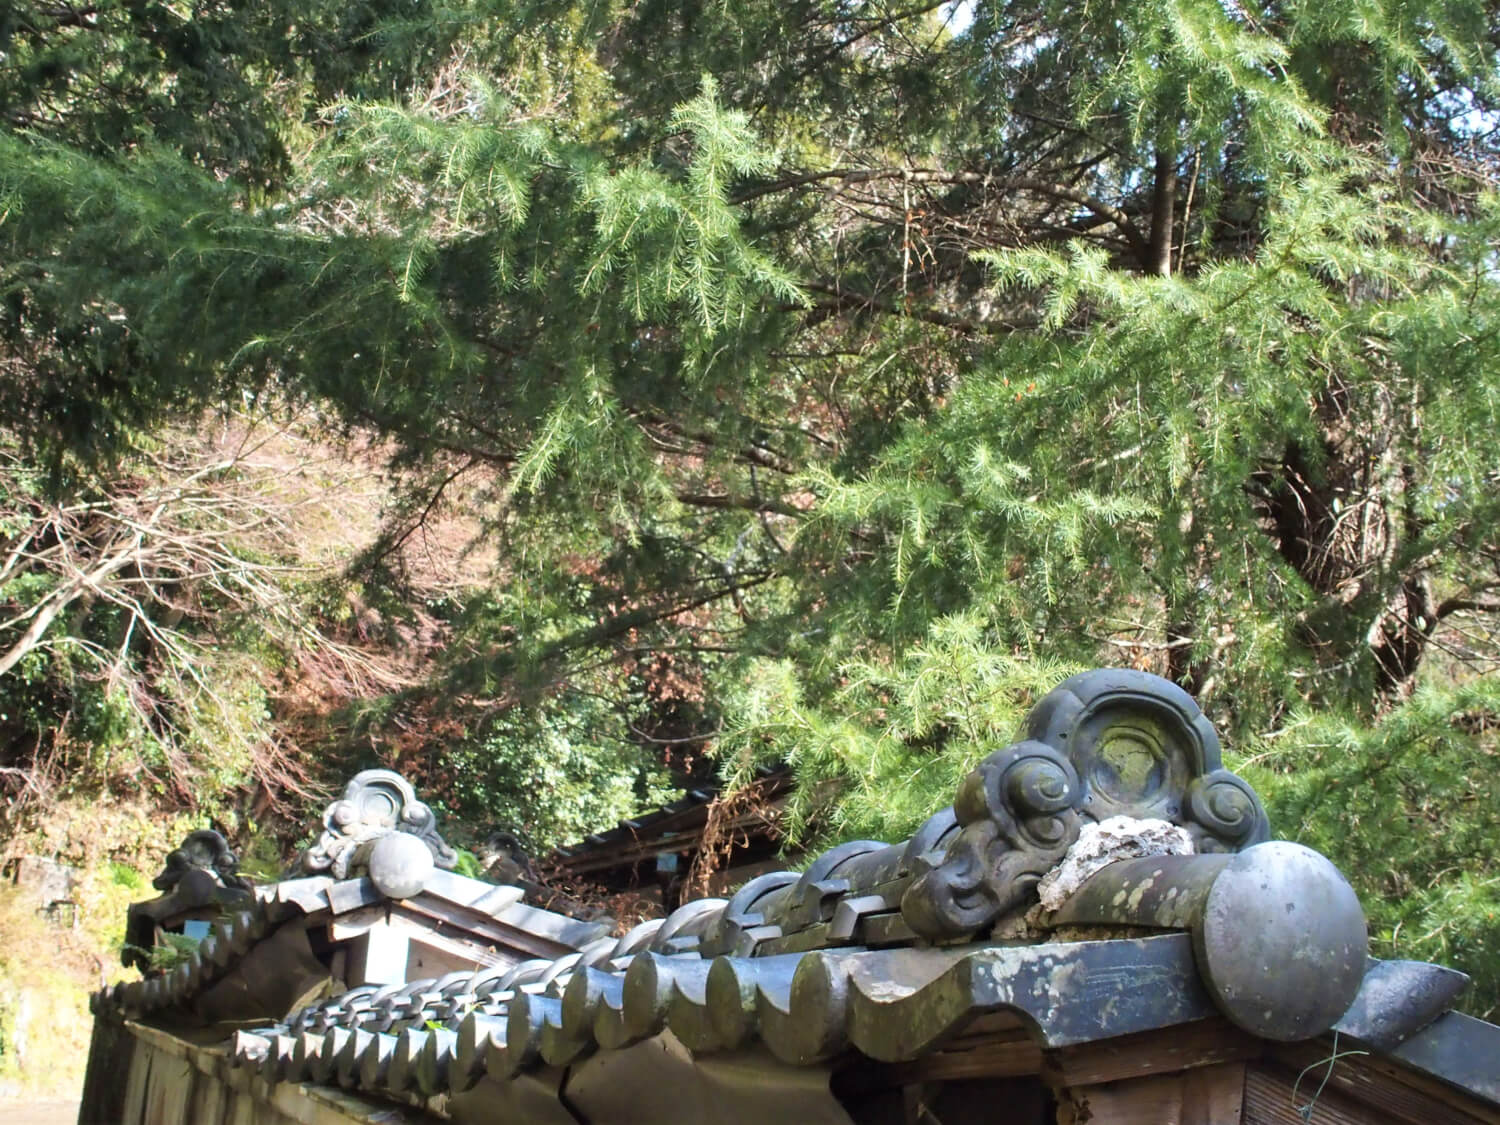 Fence with "kawara" roof